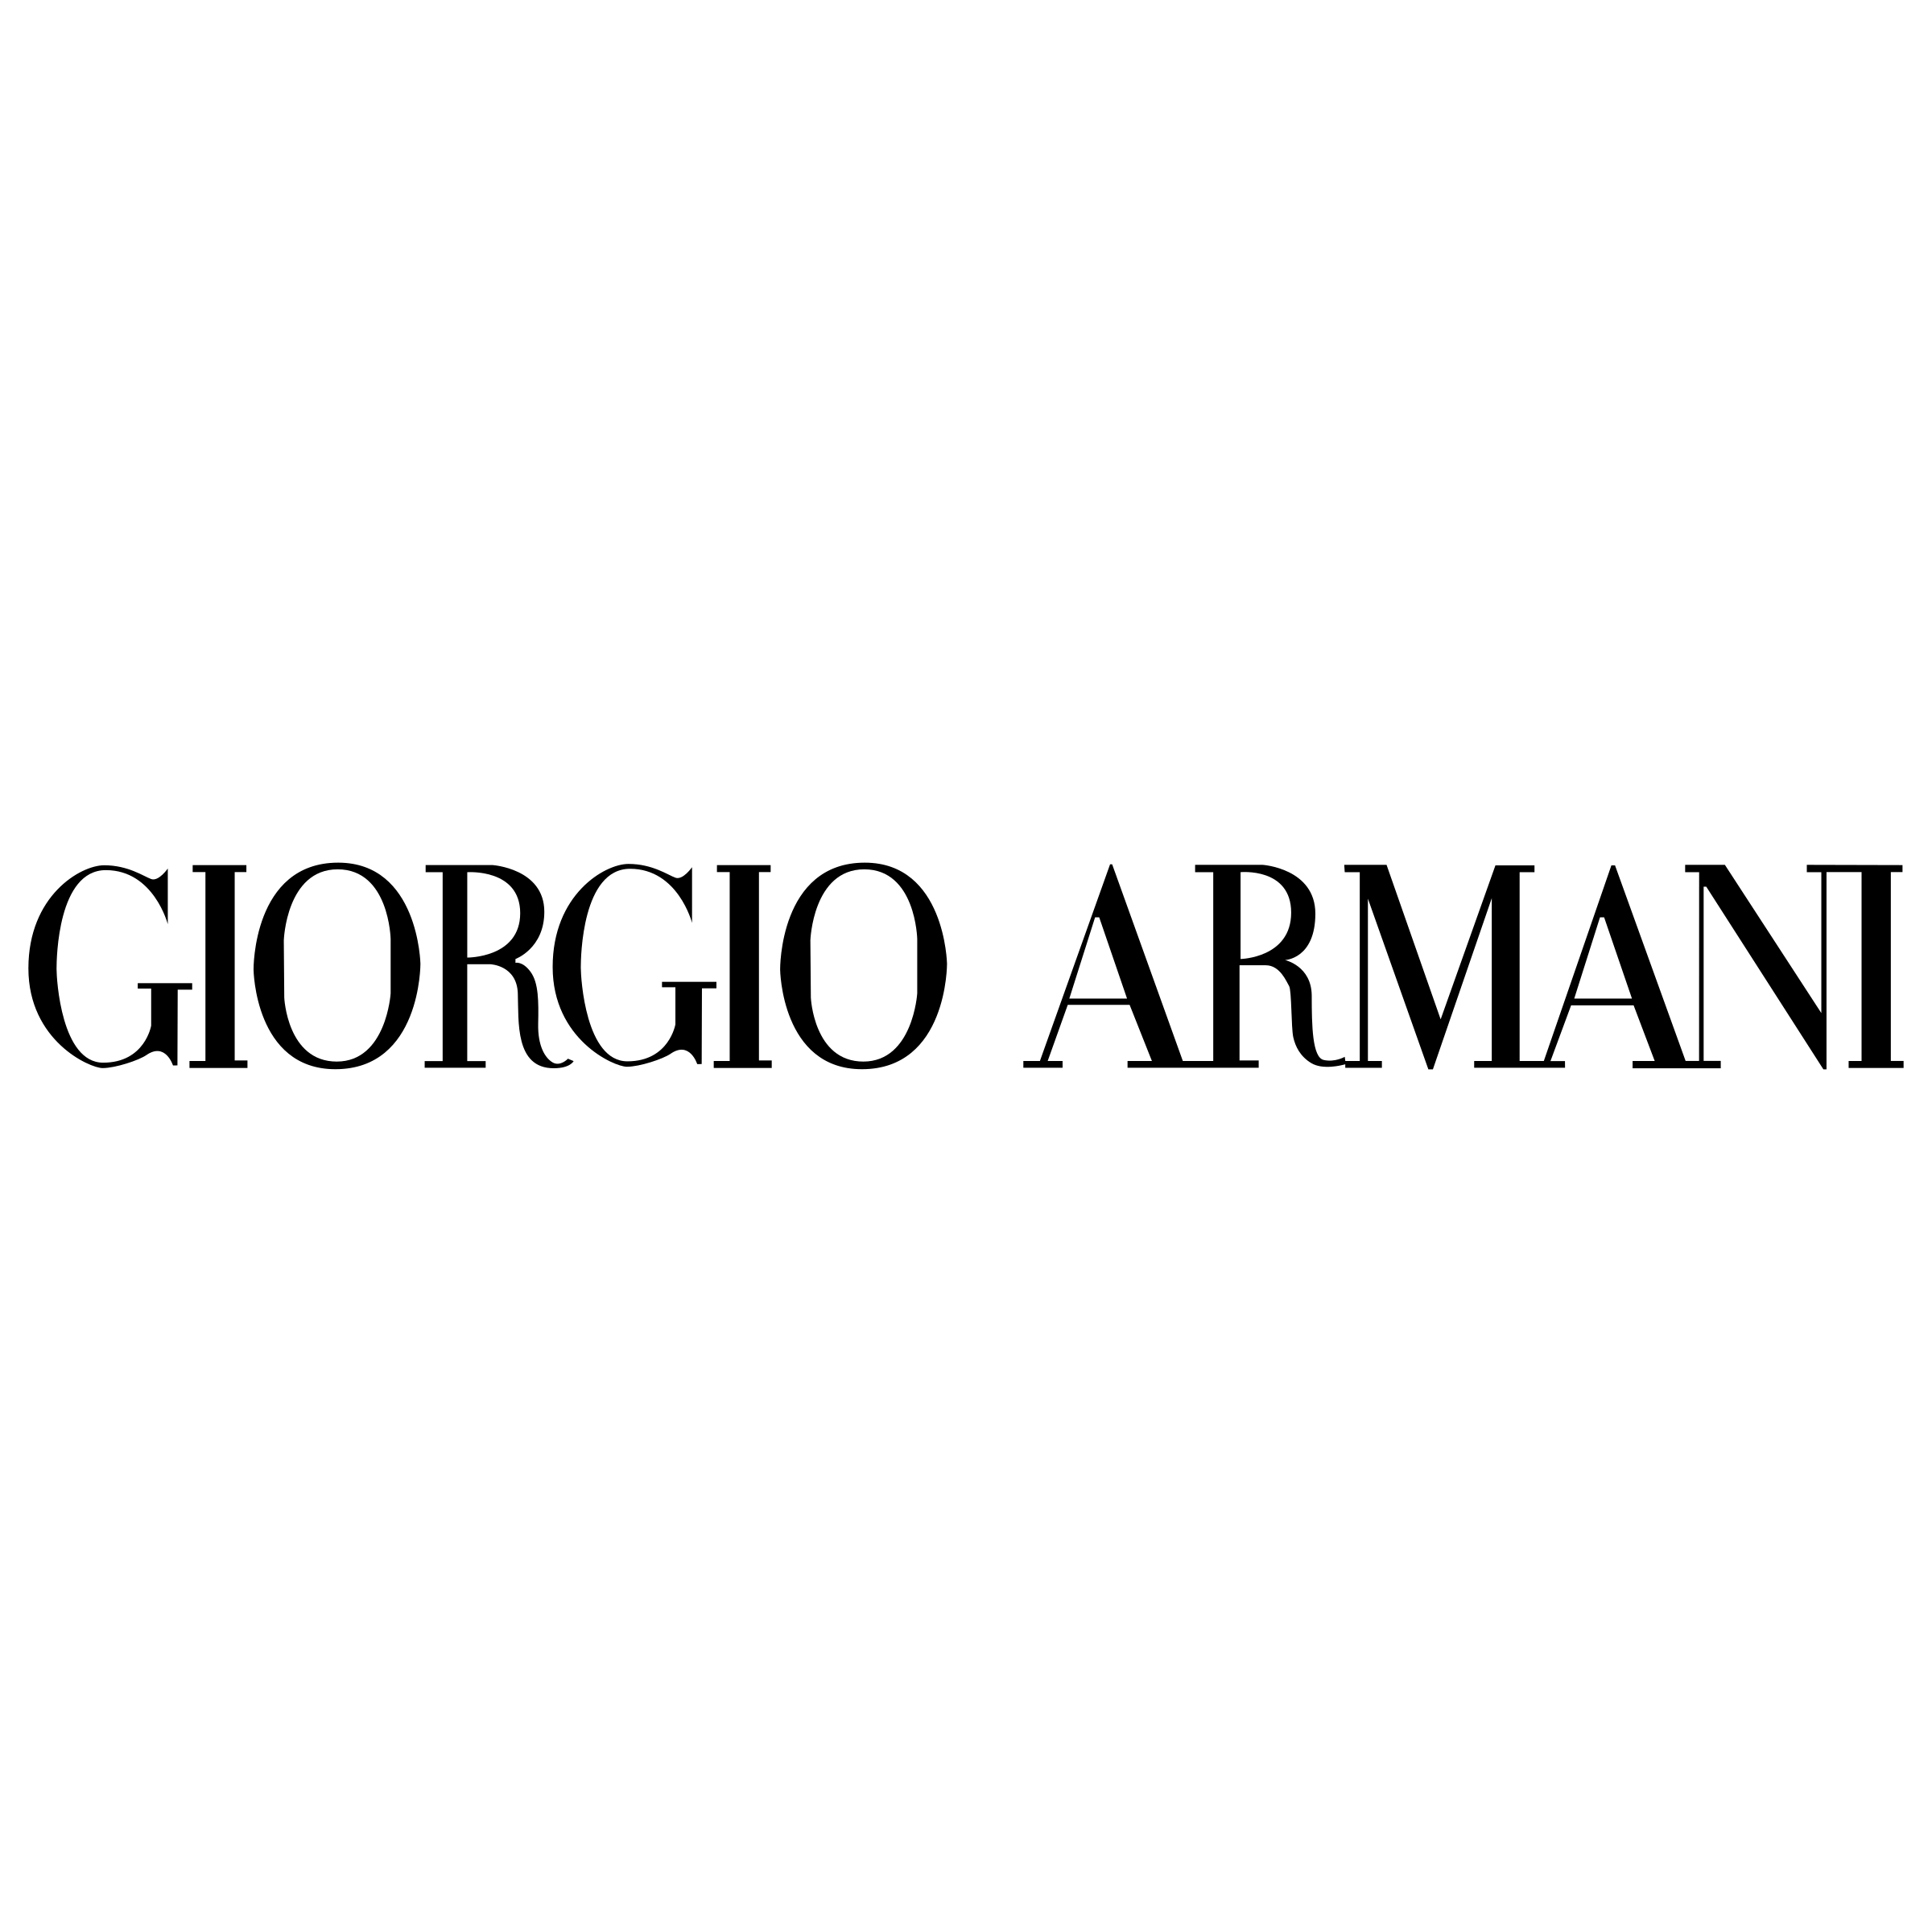 Armani Logo - Giorgio Armani Logo PNG Transparent & SVG Vector - Freebie Supply